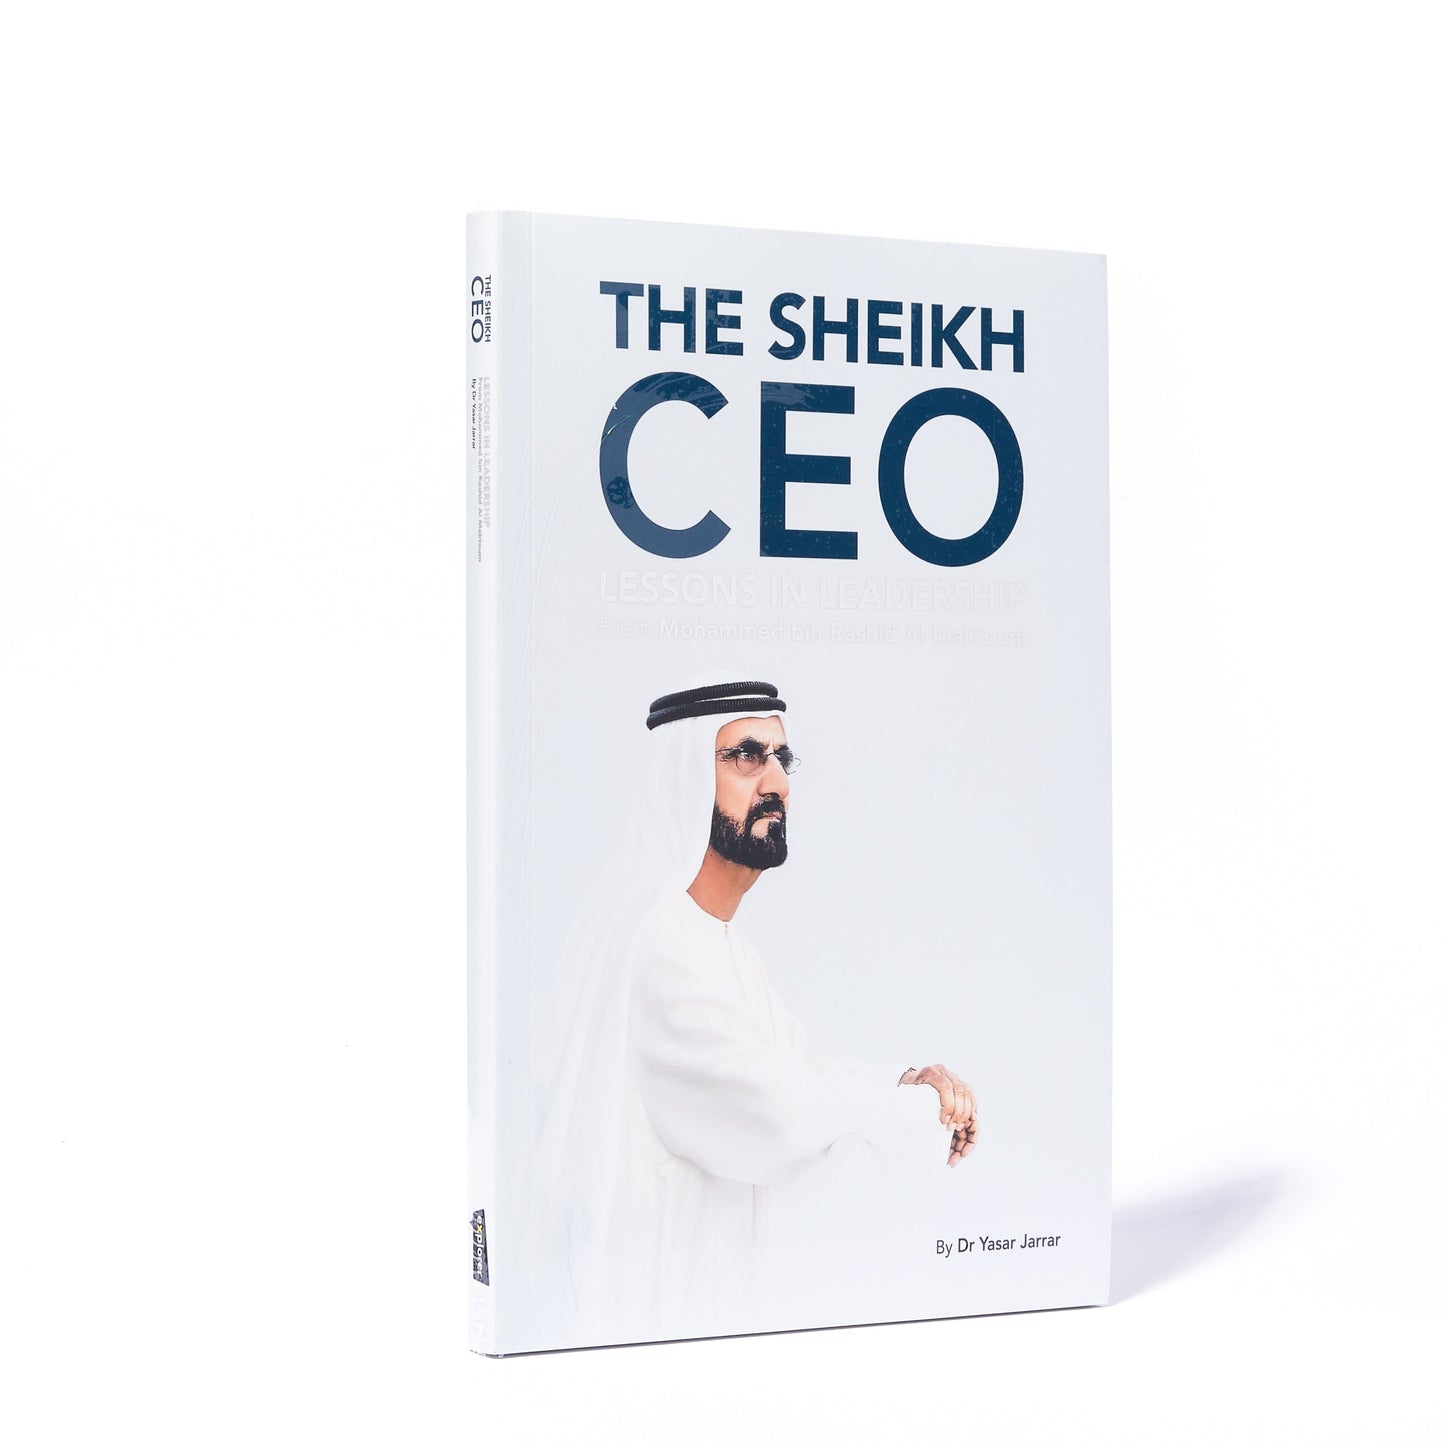 THE SHEIKH CEO